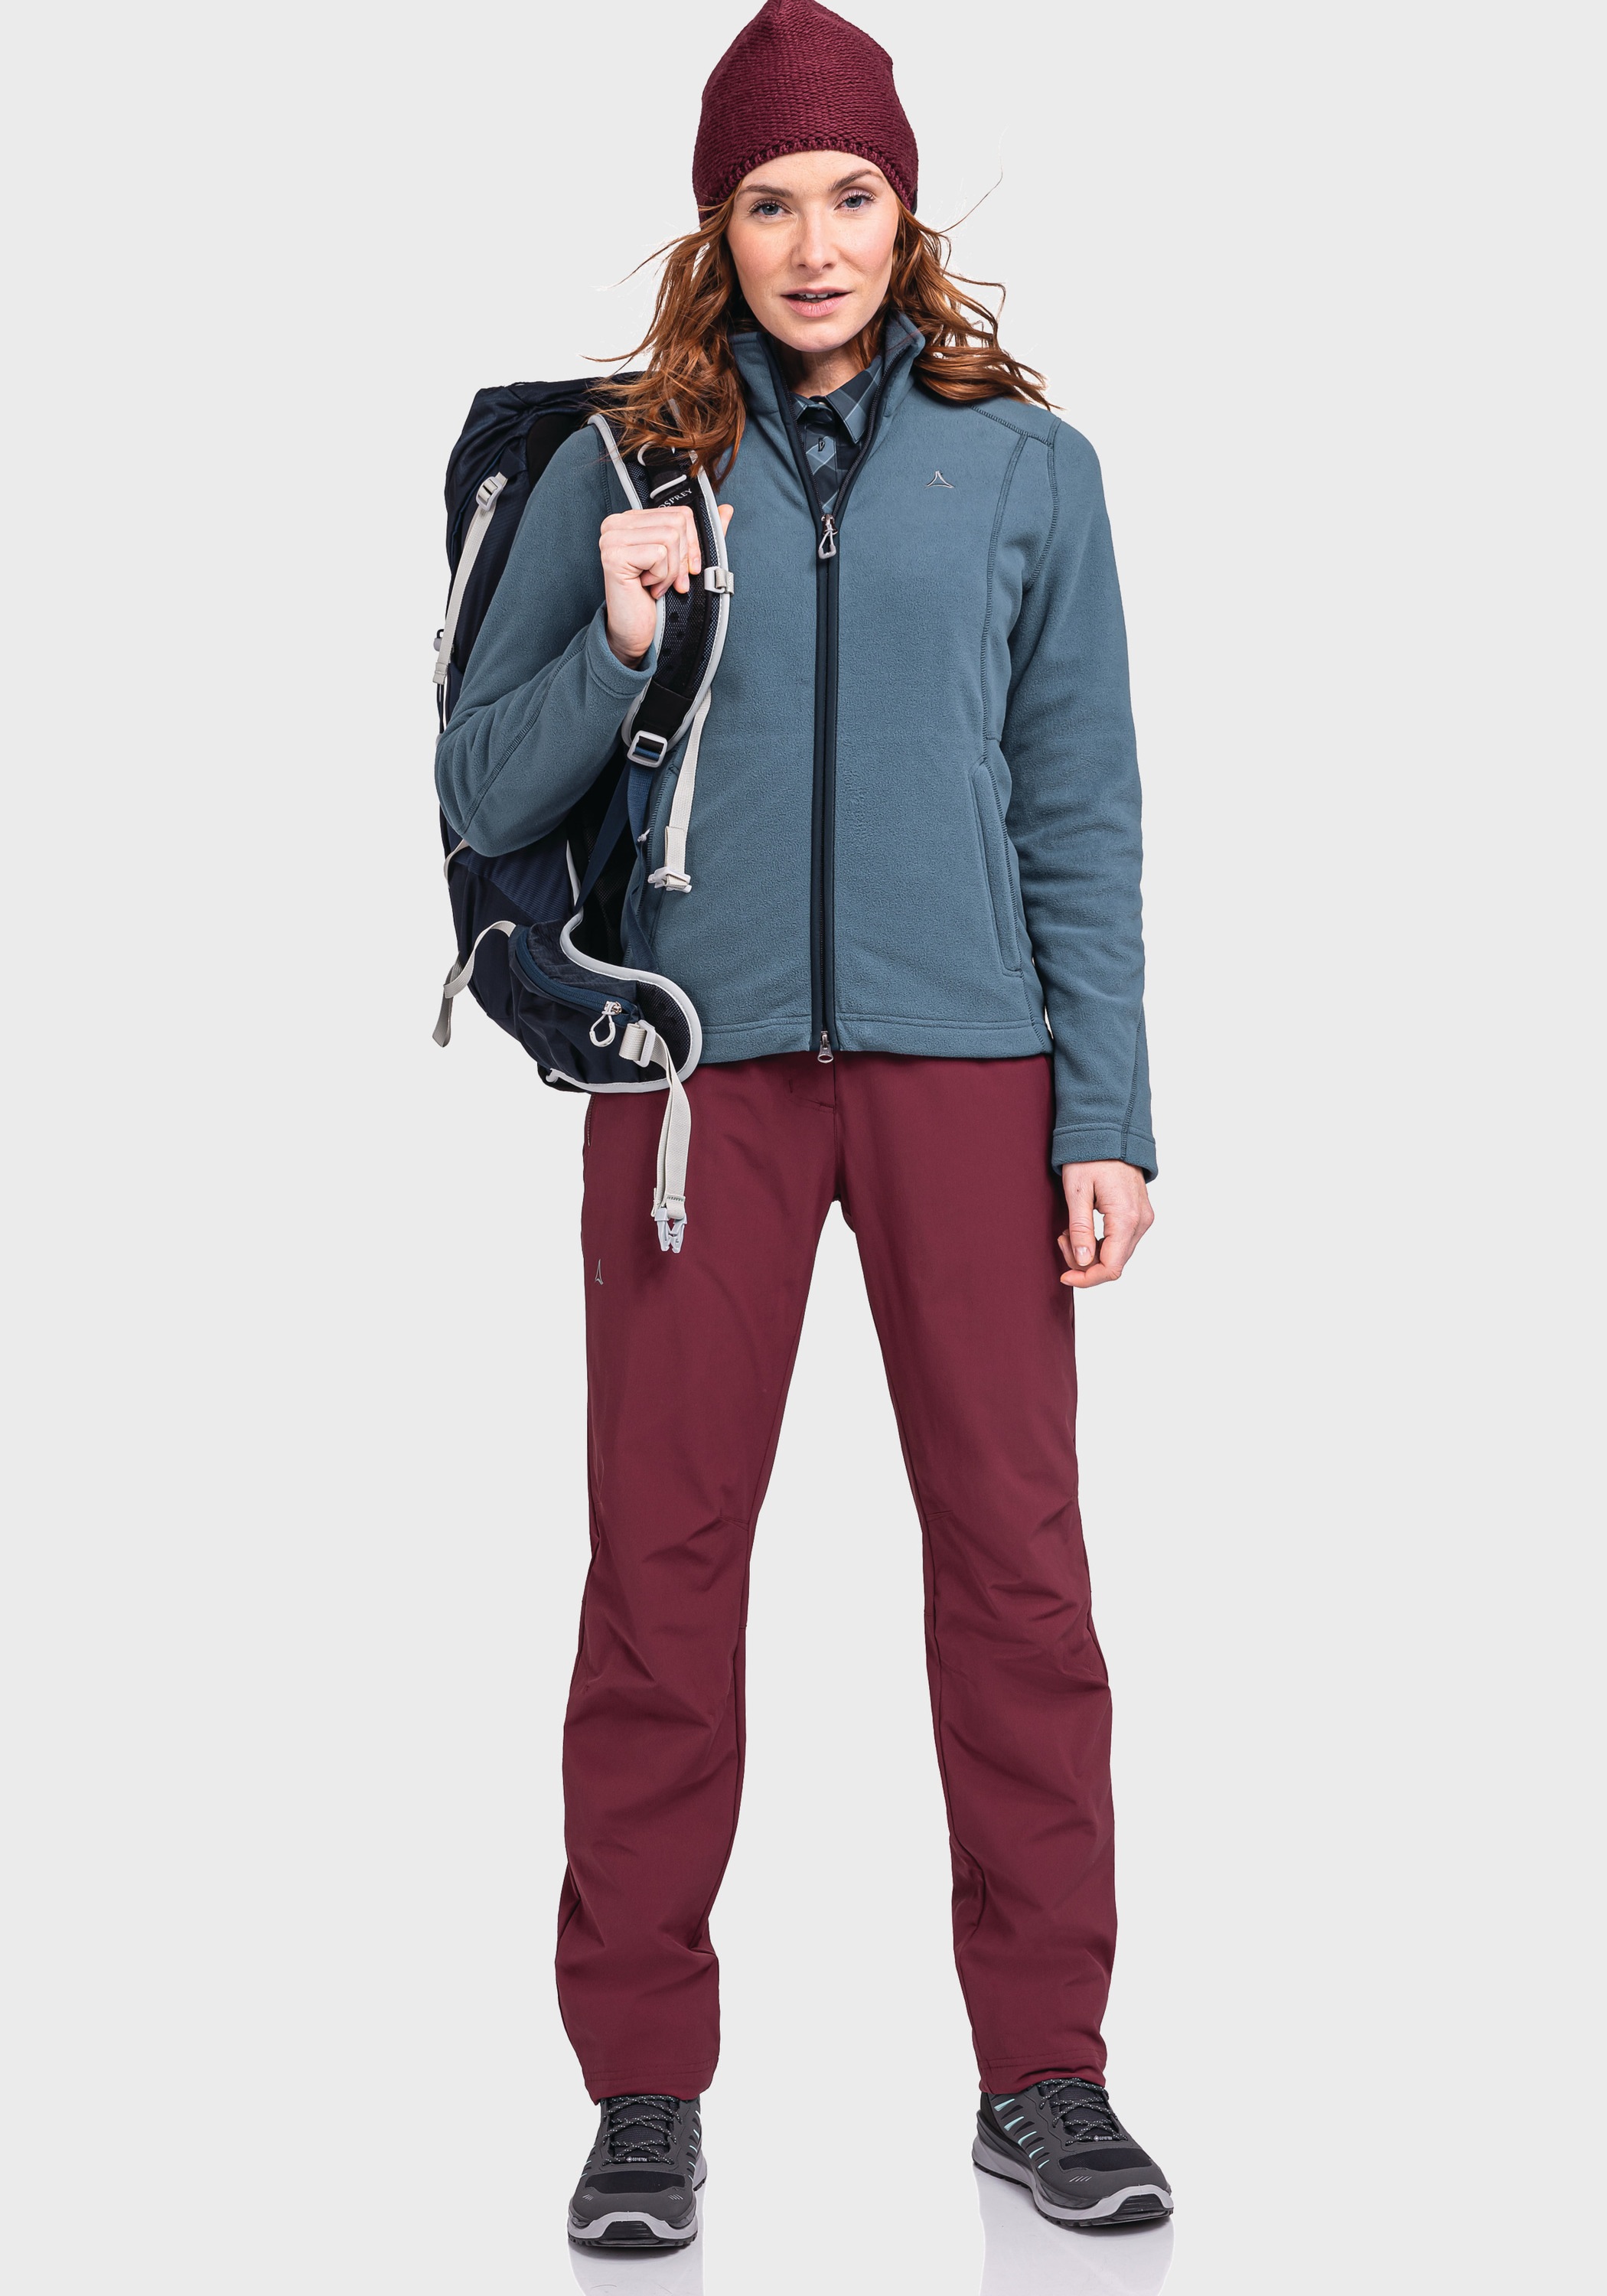 Schöffel Fleecejacke »Fleece Jacket Leona3«, Kapuze kaufen ohne